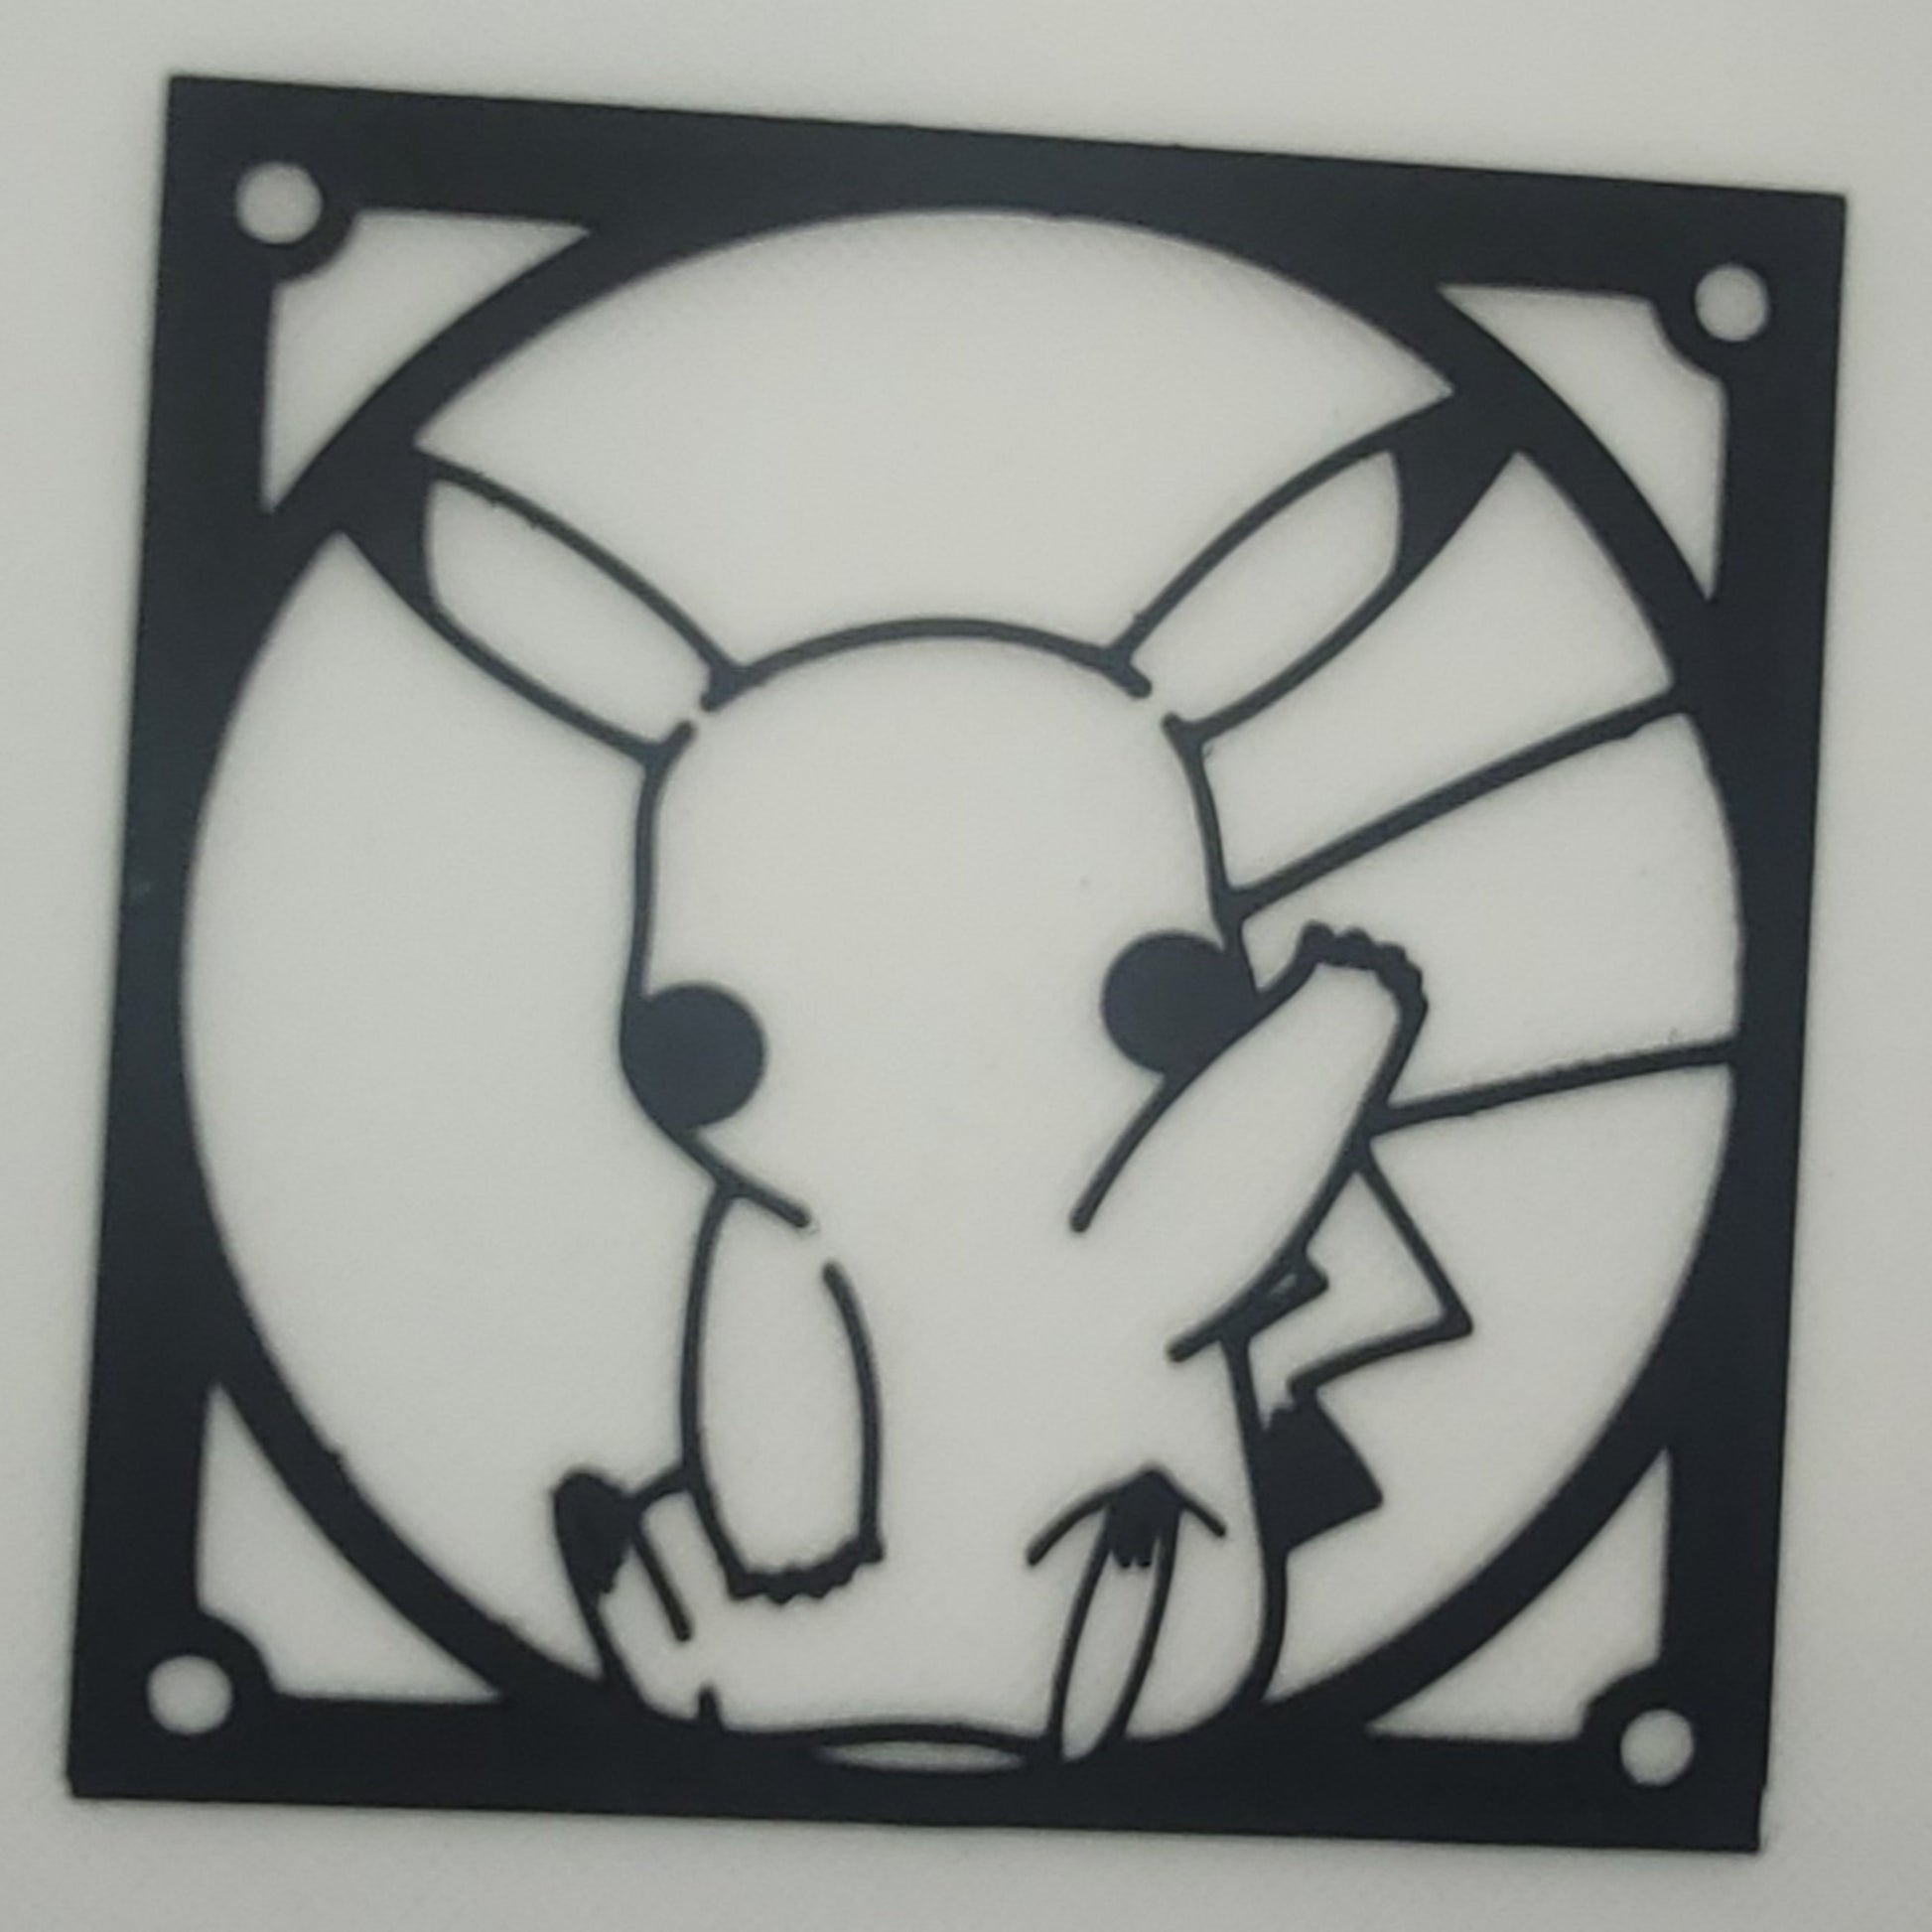 Pokemon - Pikachu Pc Fan Cover - Compfans.com